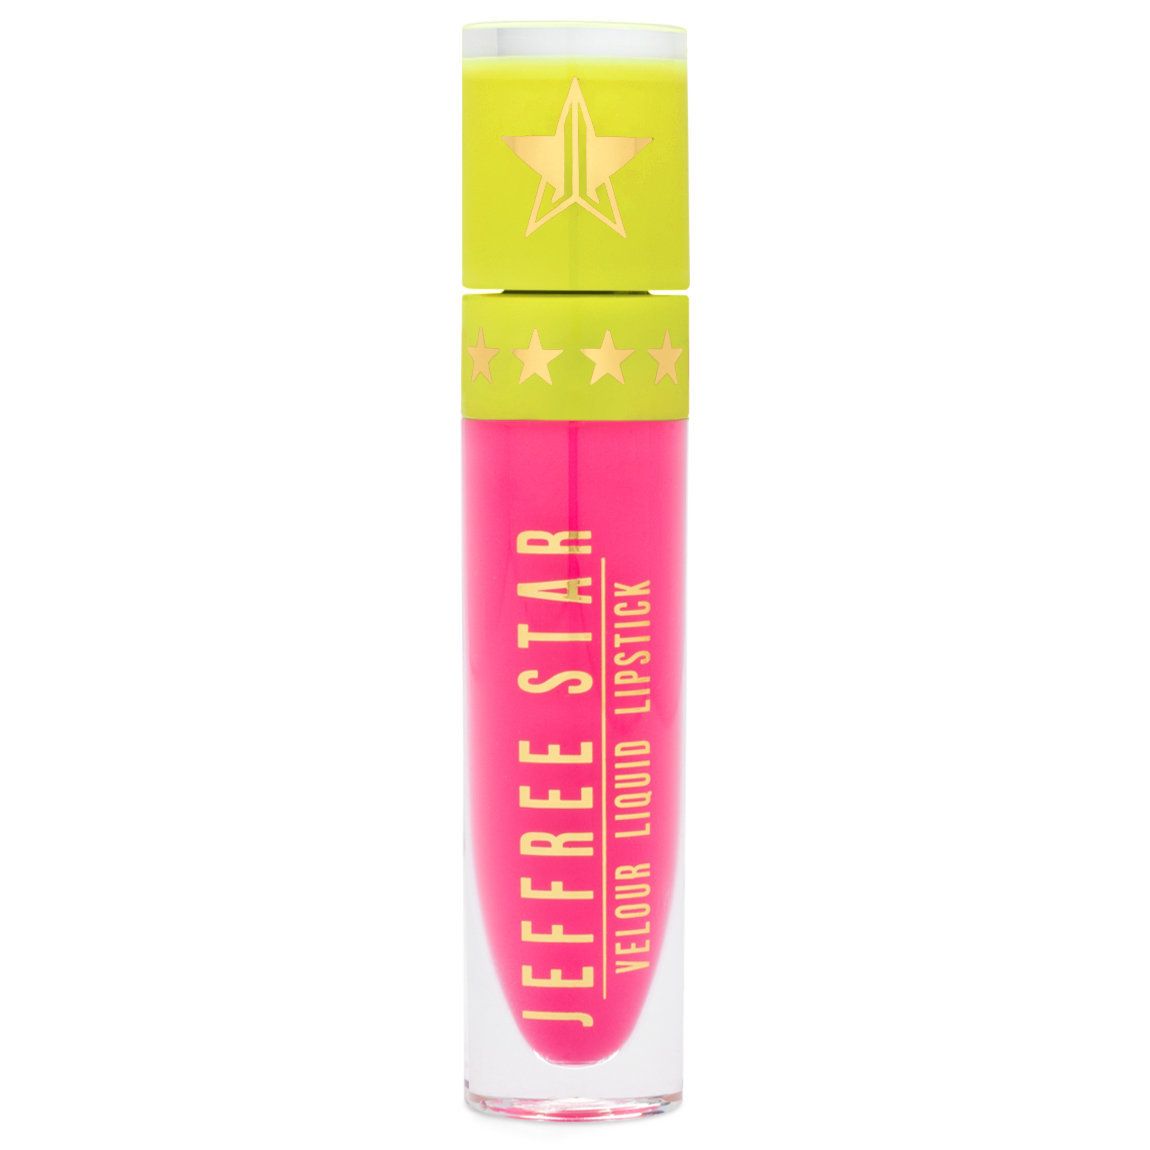 Velour Liquid Lipstick | Beautylish